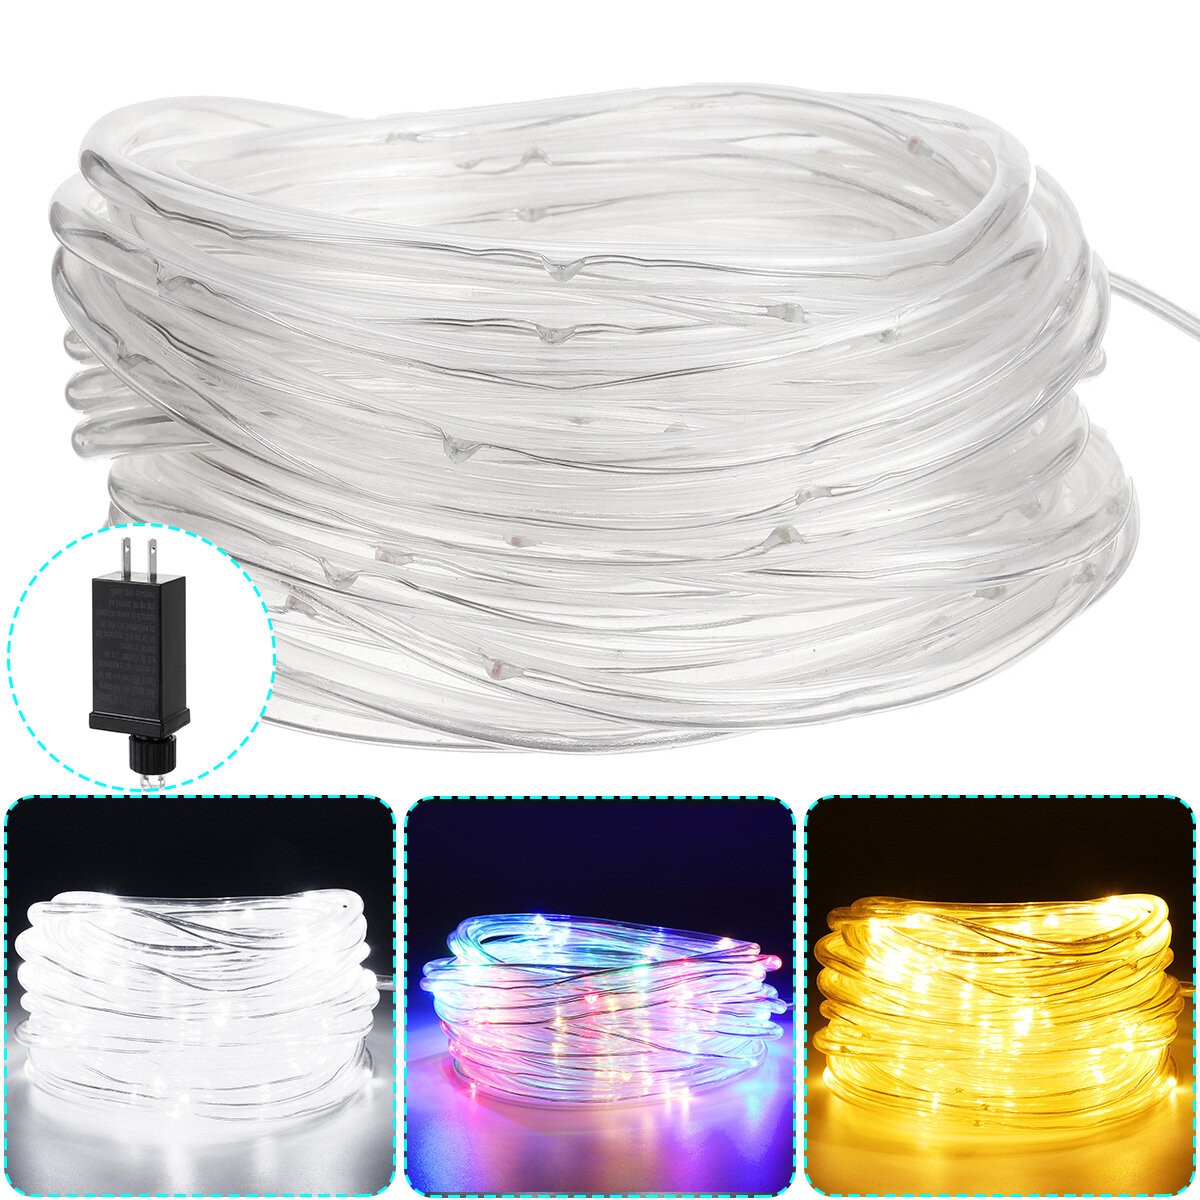 10M 100LED Outdoor Tube Rope Strip String Light RGB Lamp Xmas Home Decor Lights with US Plug